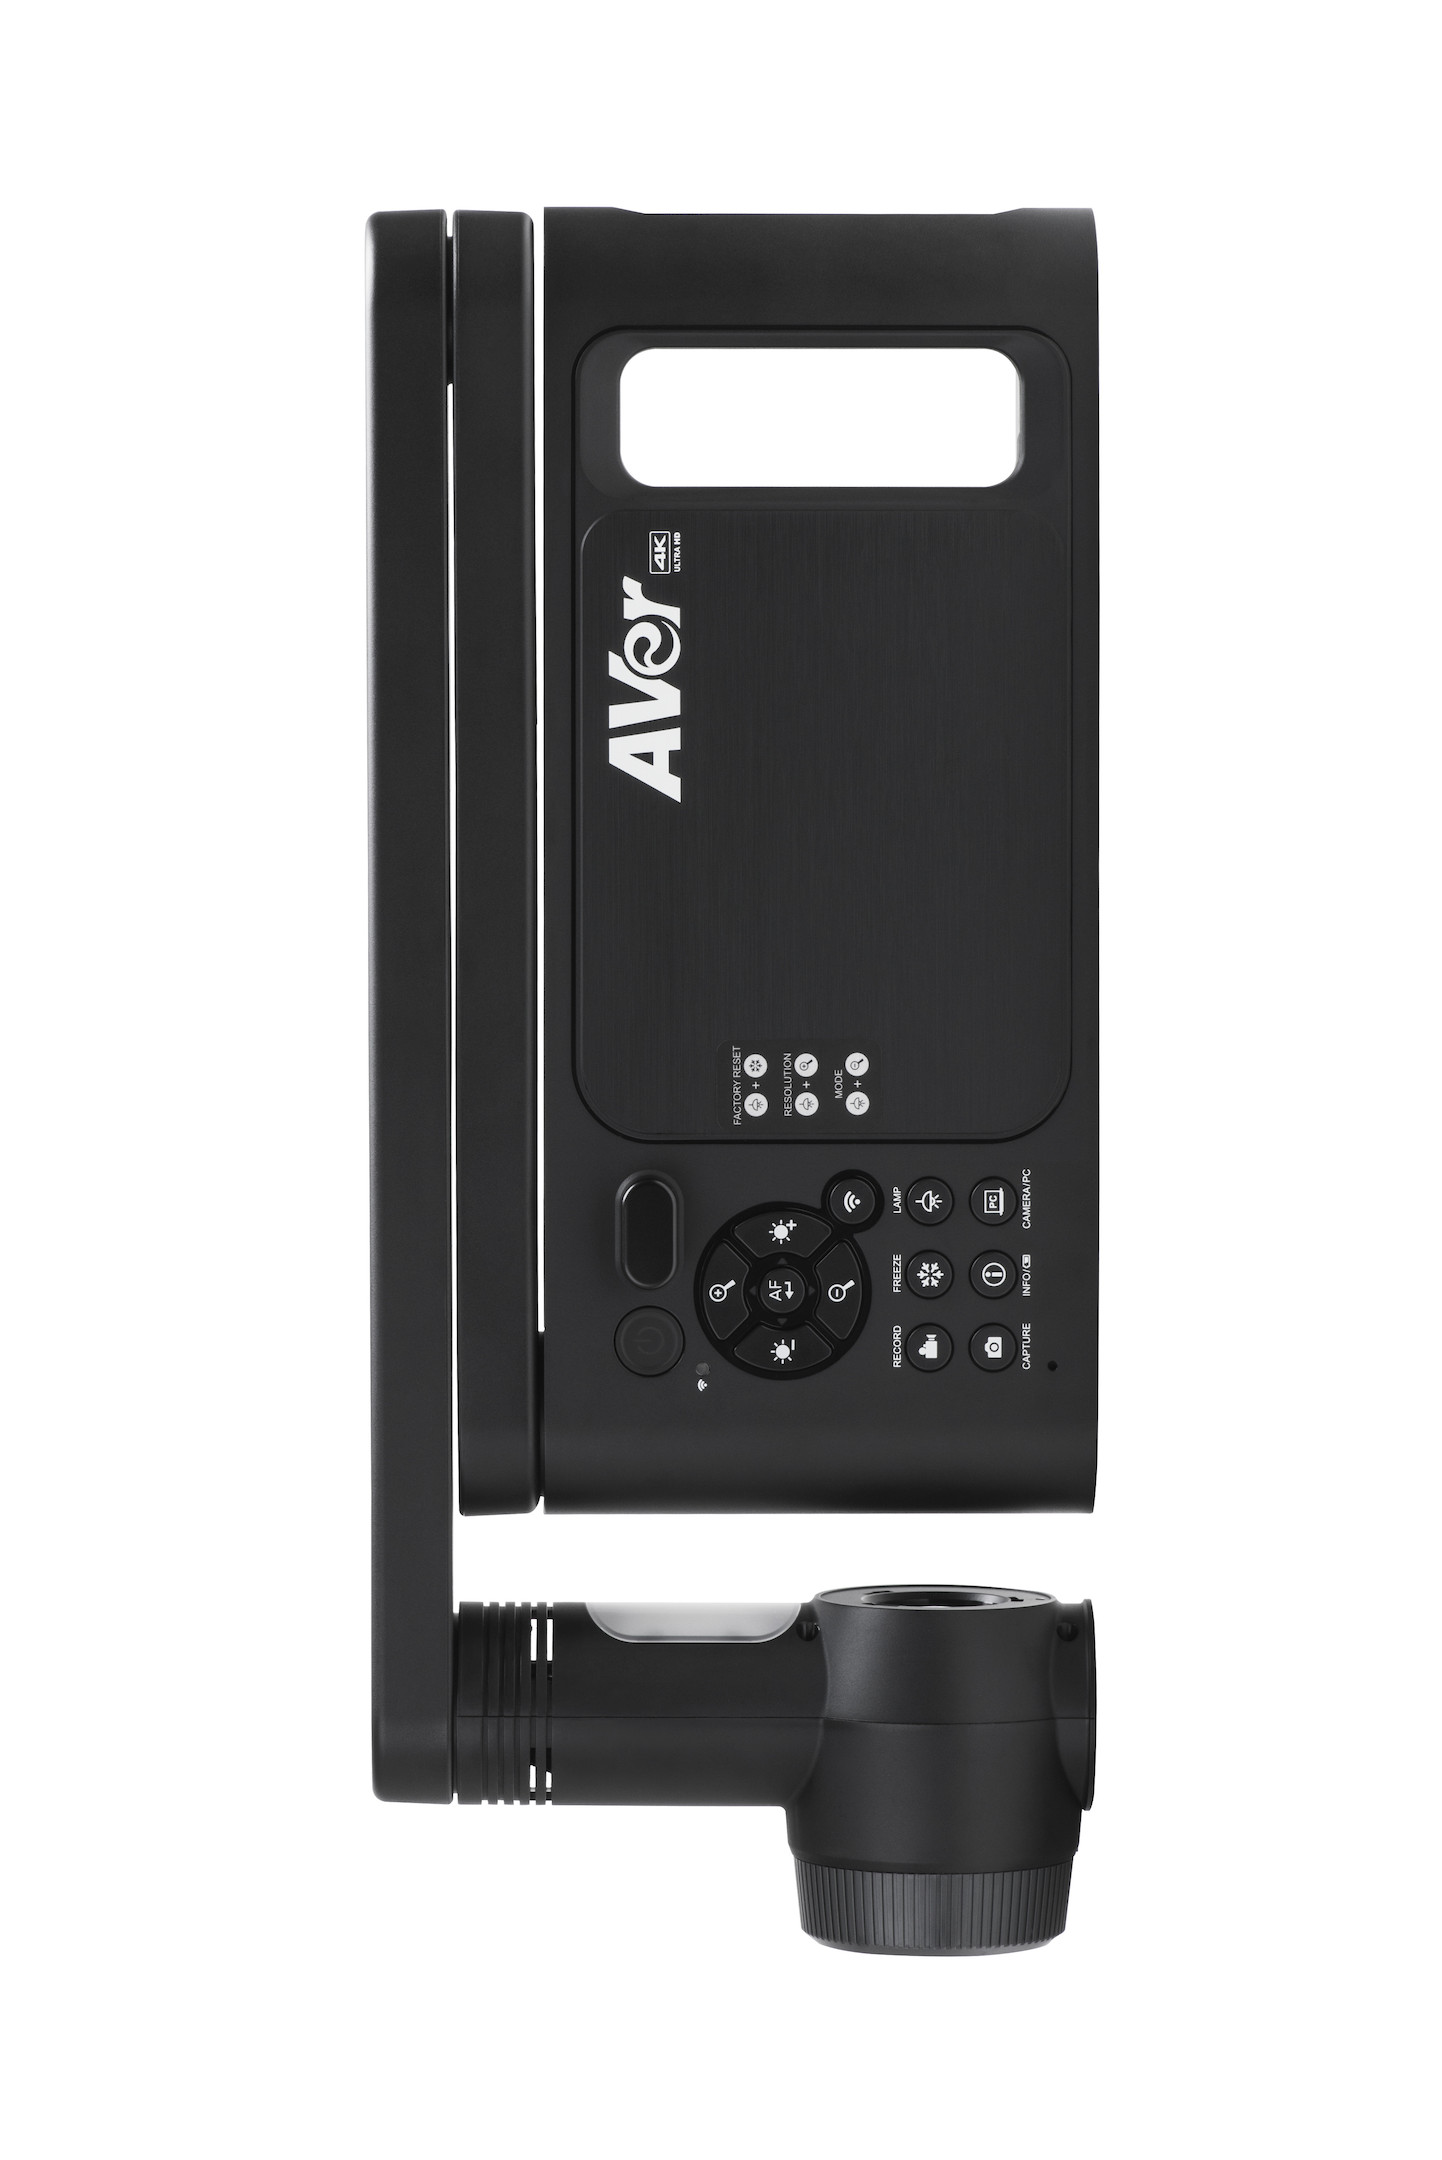 AVer-M70W-Dokumentenkamera-4K-13MP-60fps-230x-Zoom-Demo